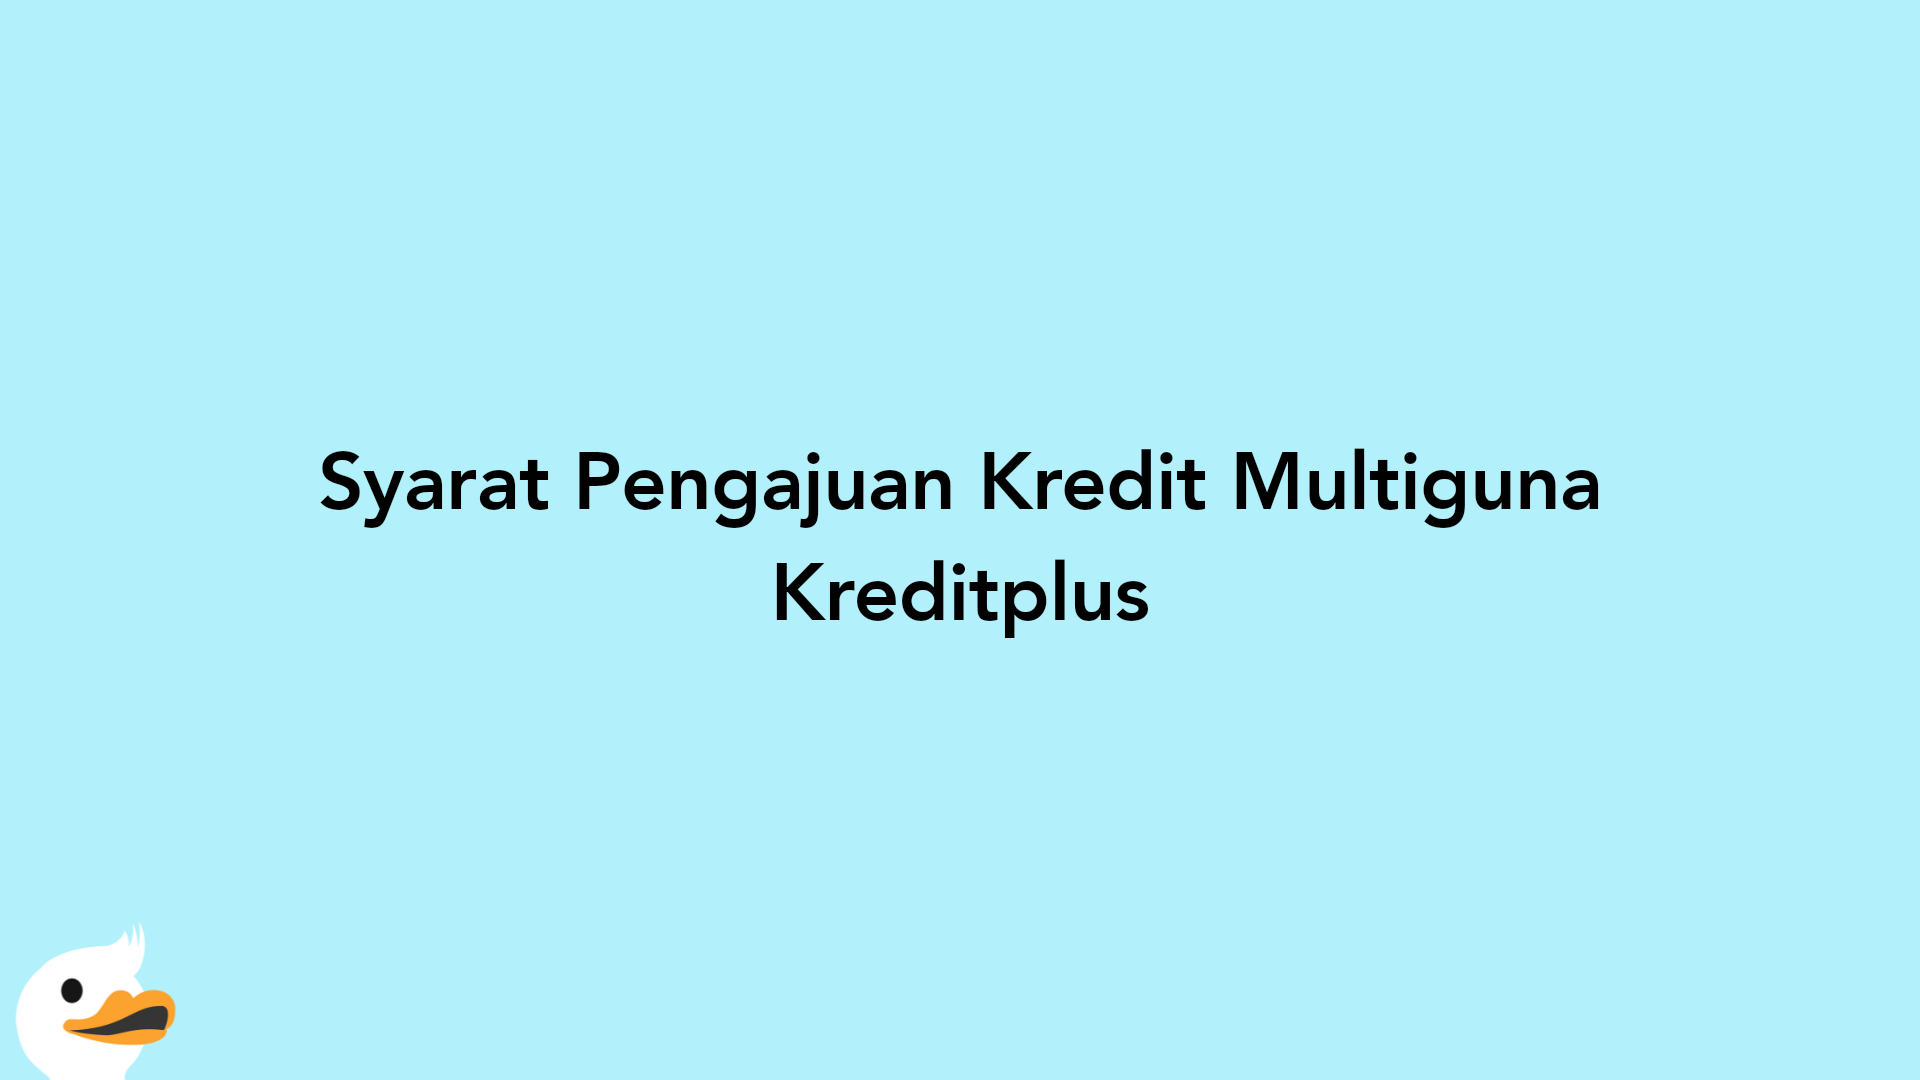 Syarat Pengajuan Kredit Multiguna Kreditplus